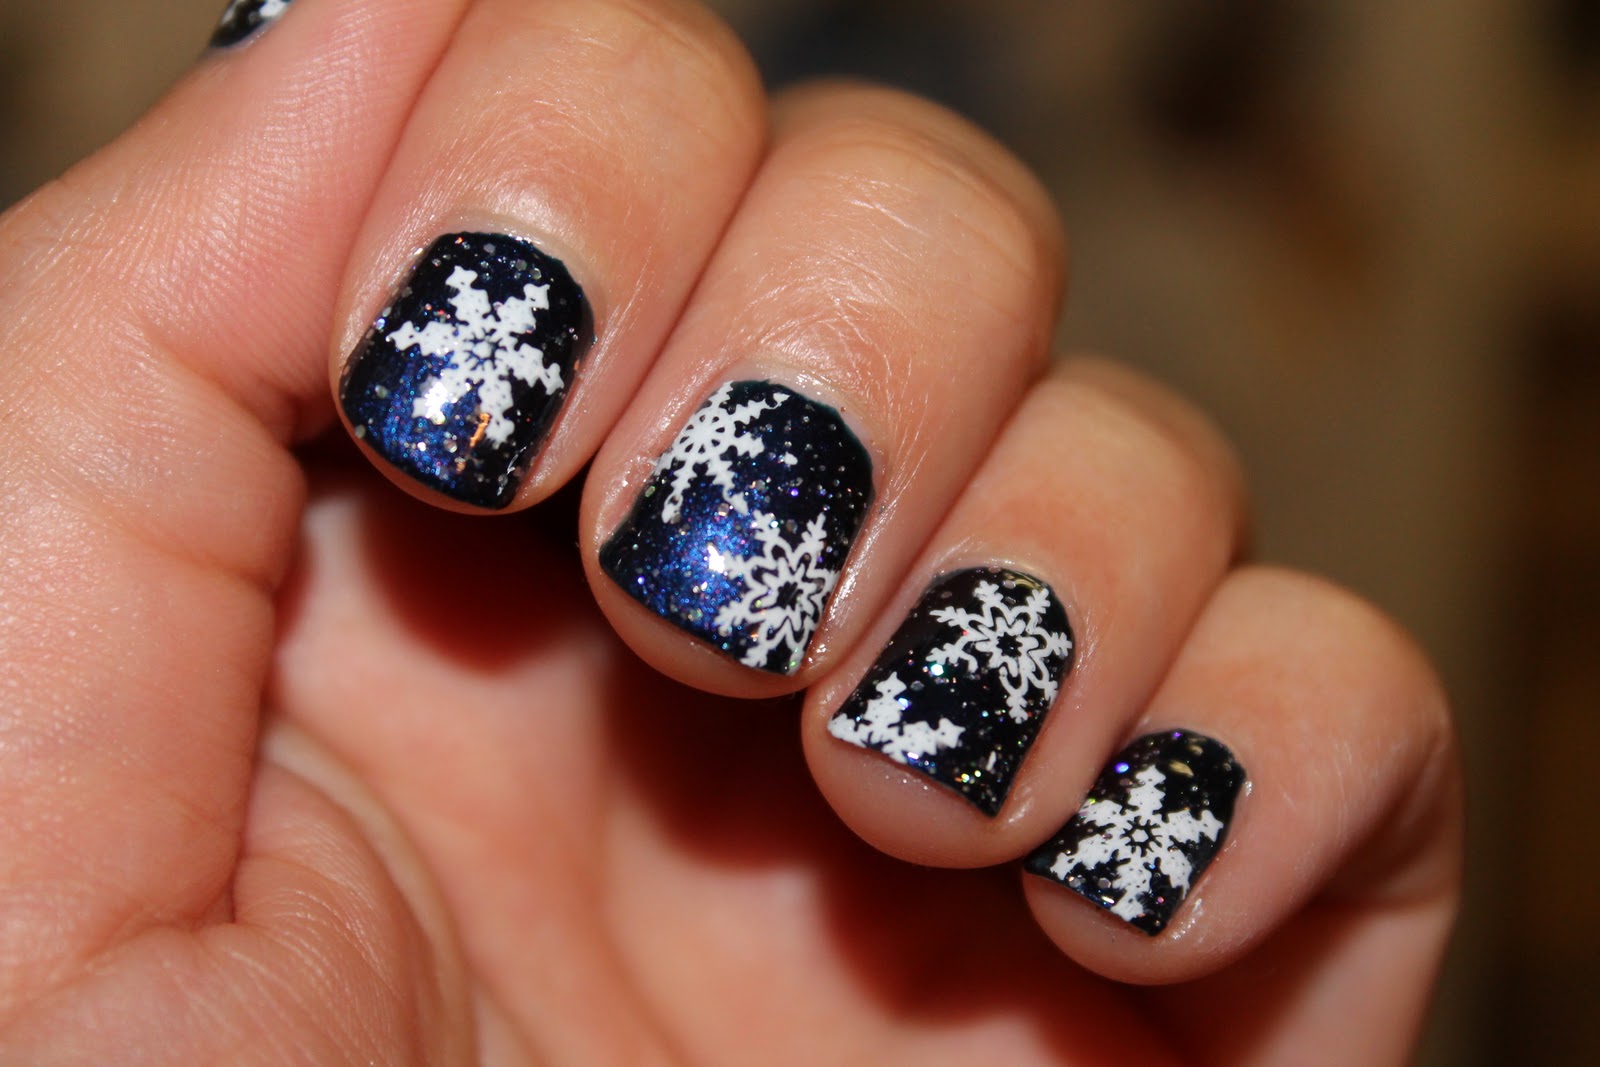 6. Snowflake Nail Designs - wide 4